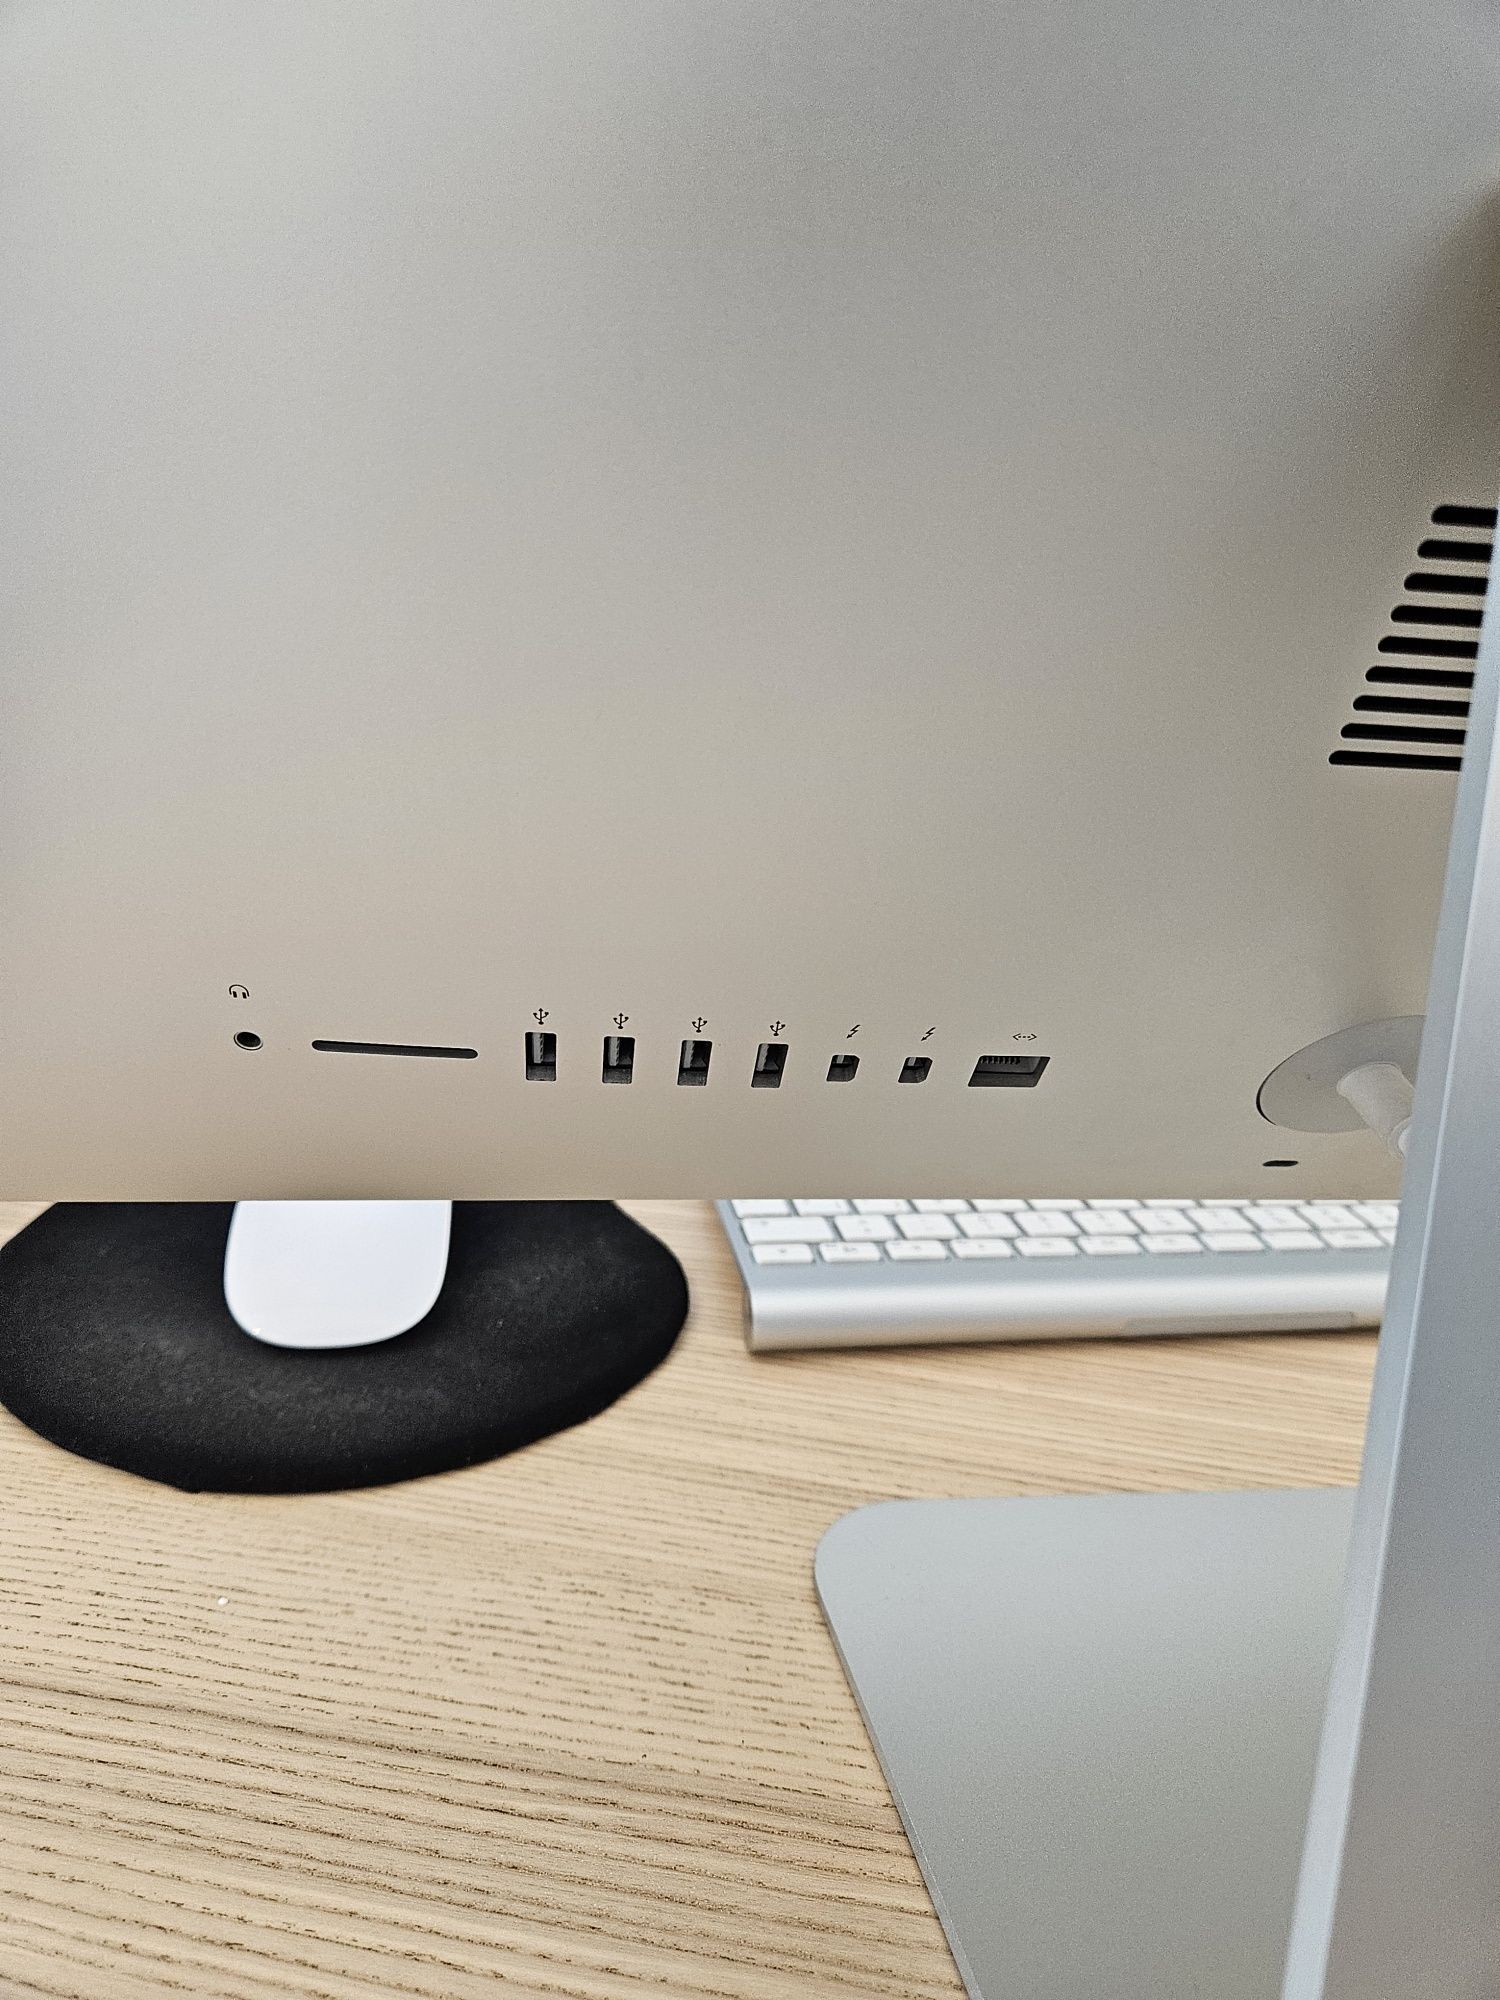 iMac, 21.5 inch, i5, 8GB, 1T, 2013